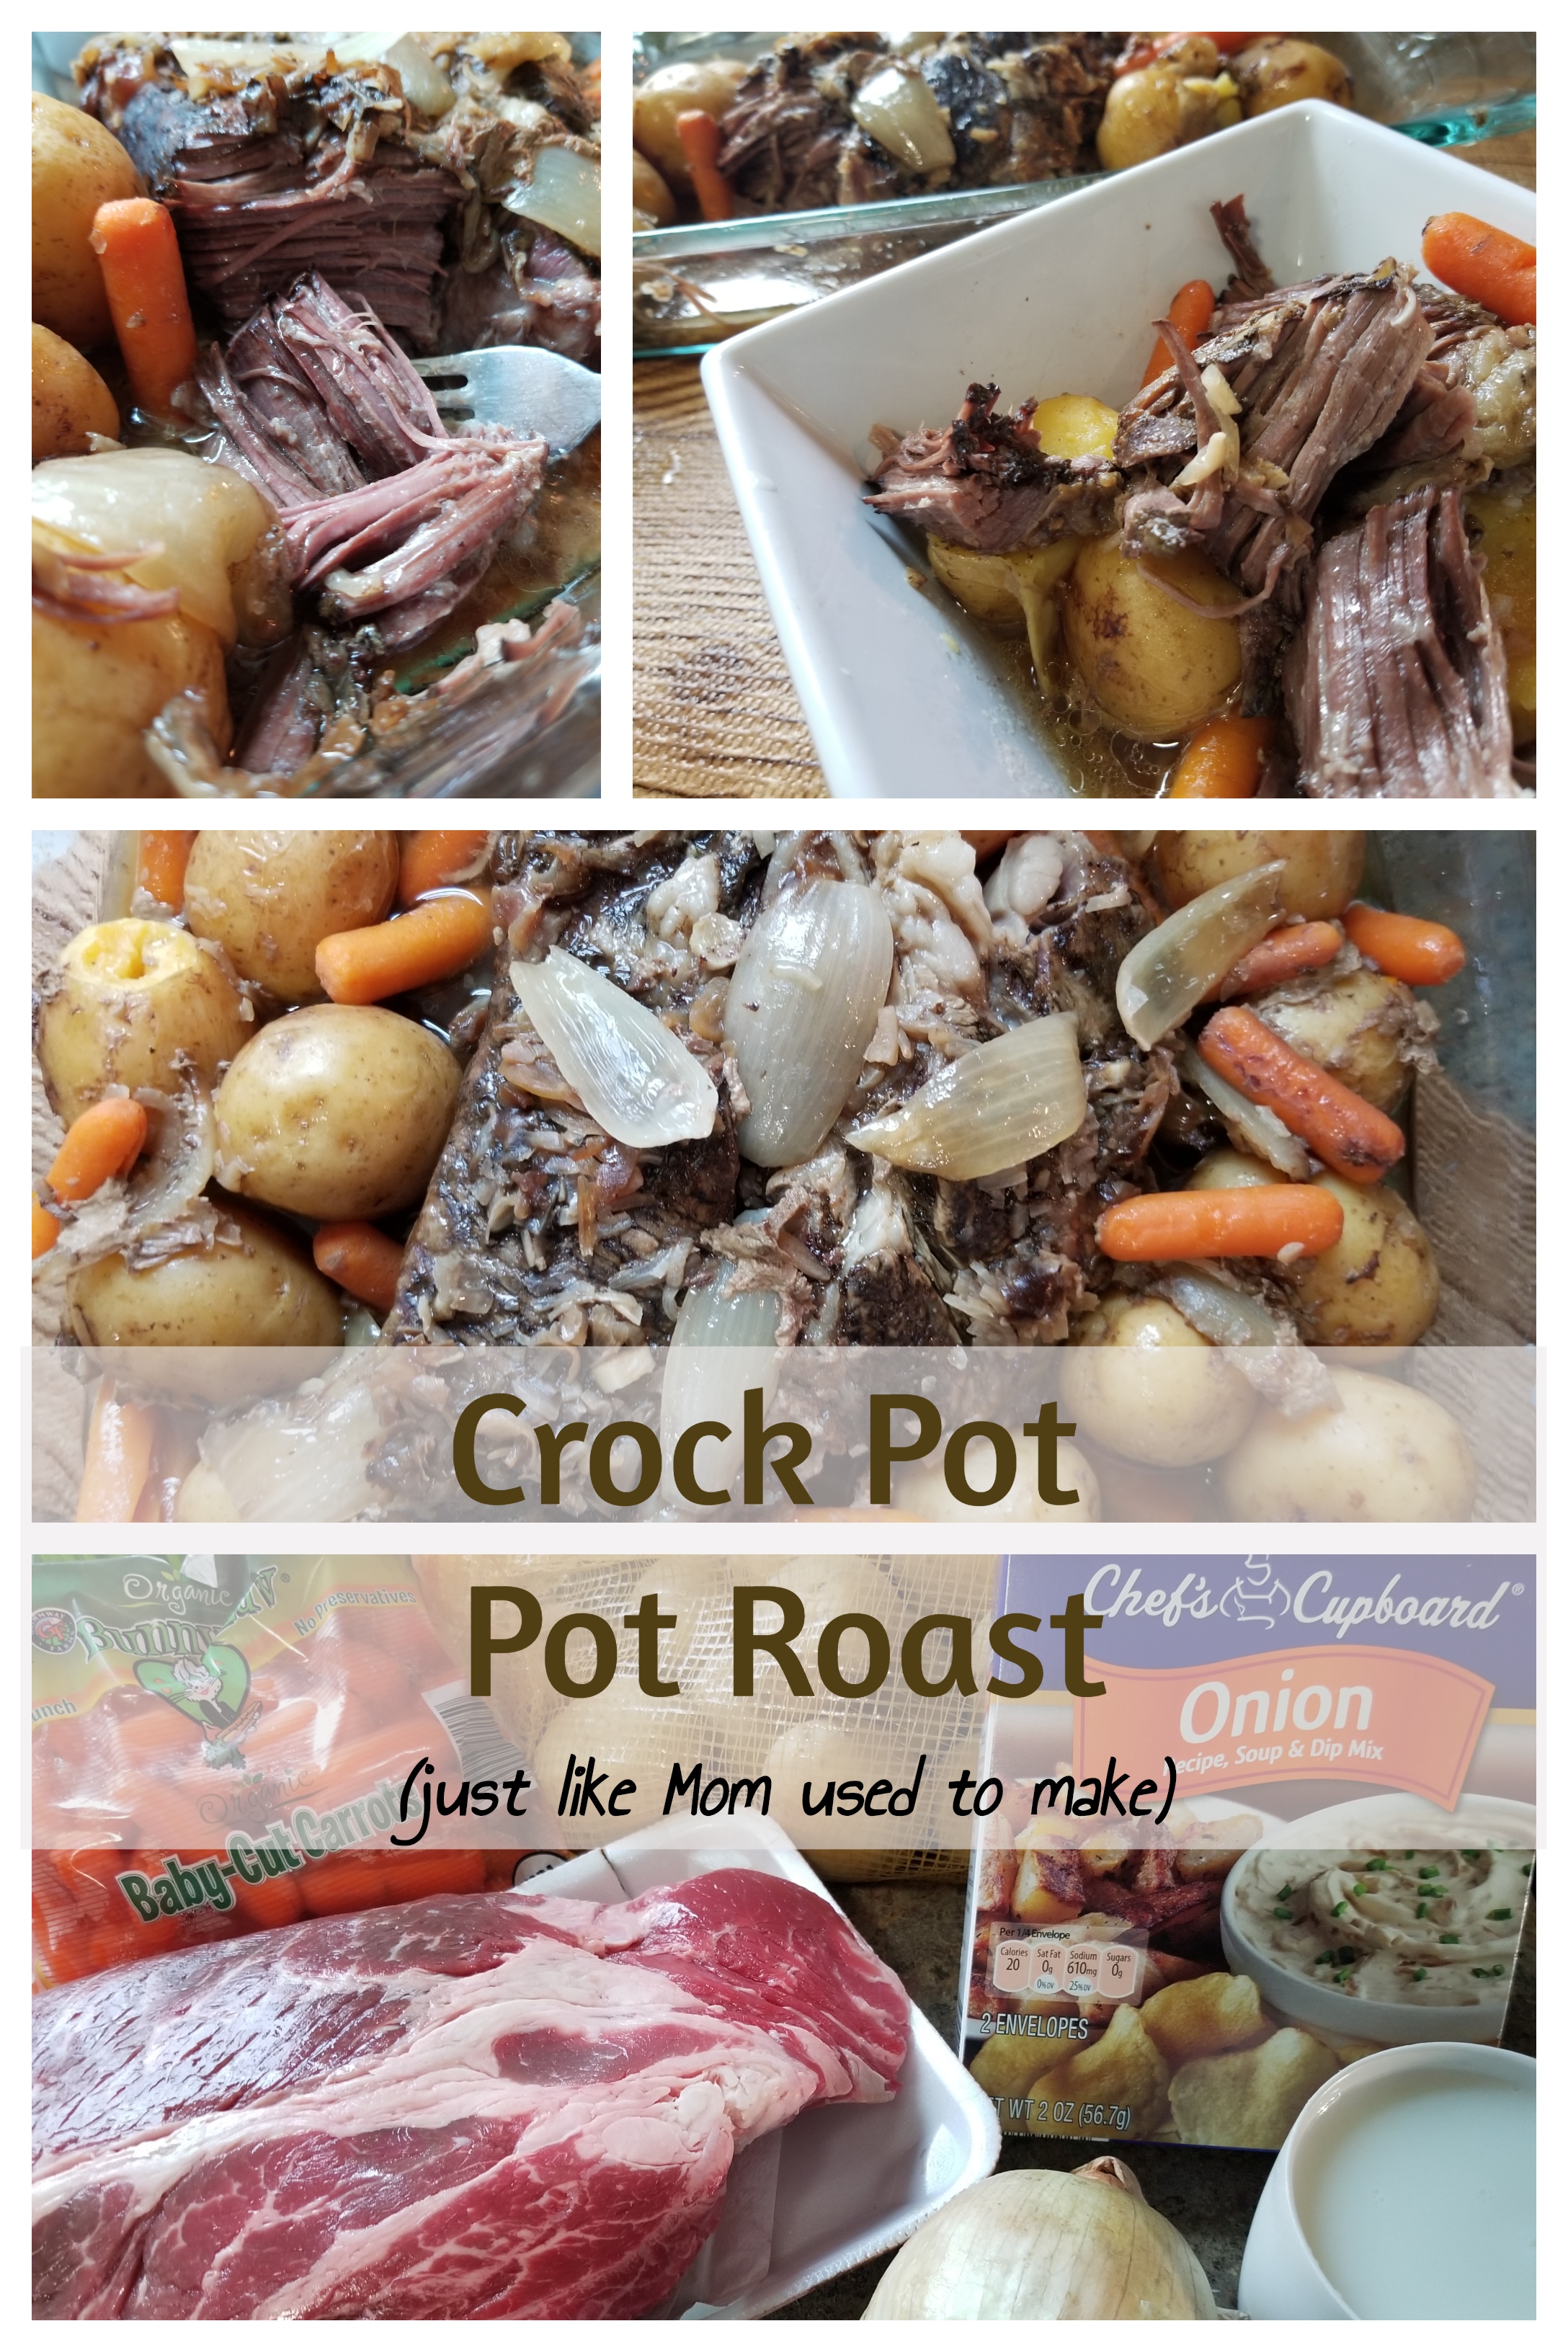 Crock pot pot roast collage.jpg